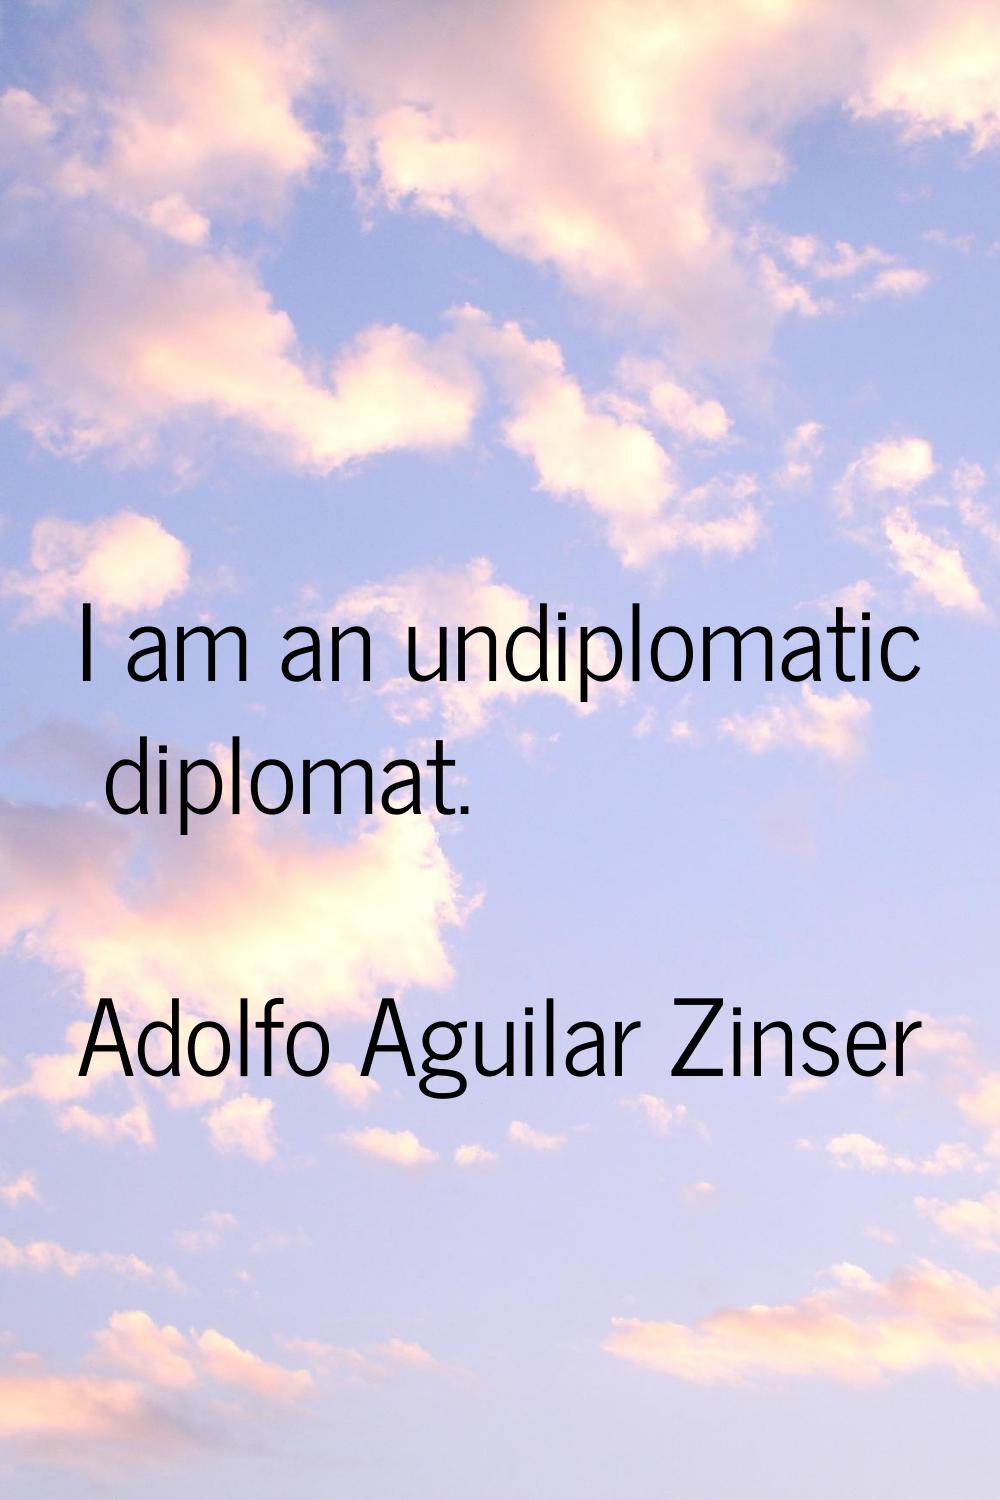 I am an undiplomatic diplomat.